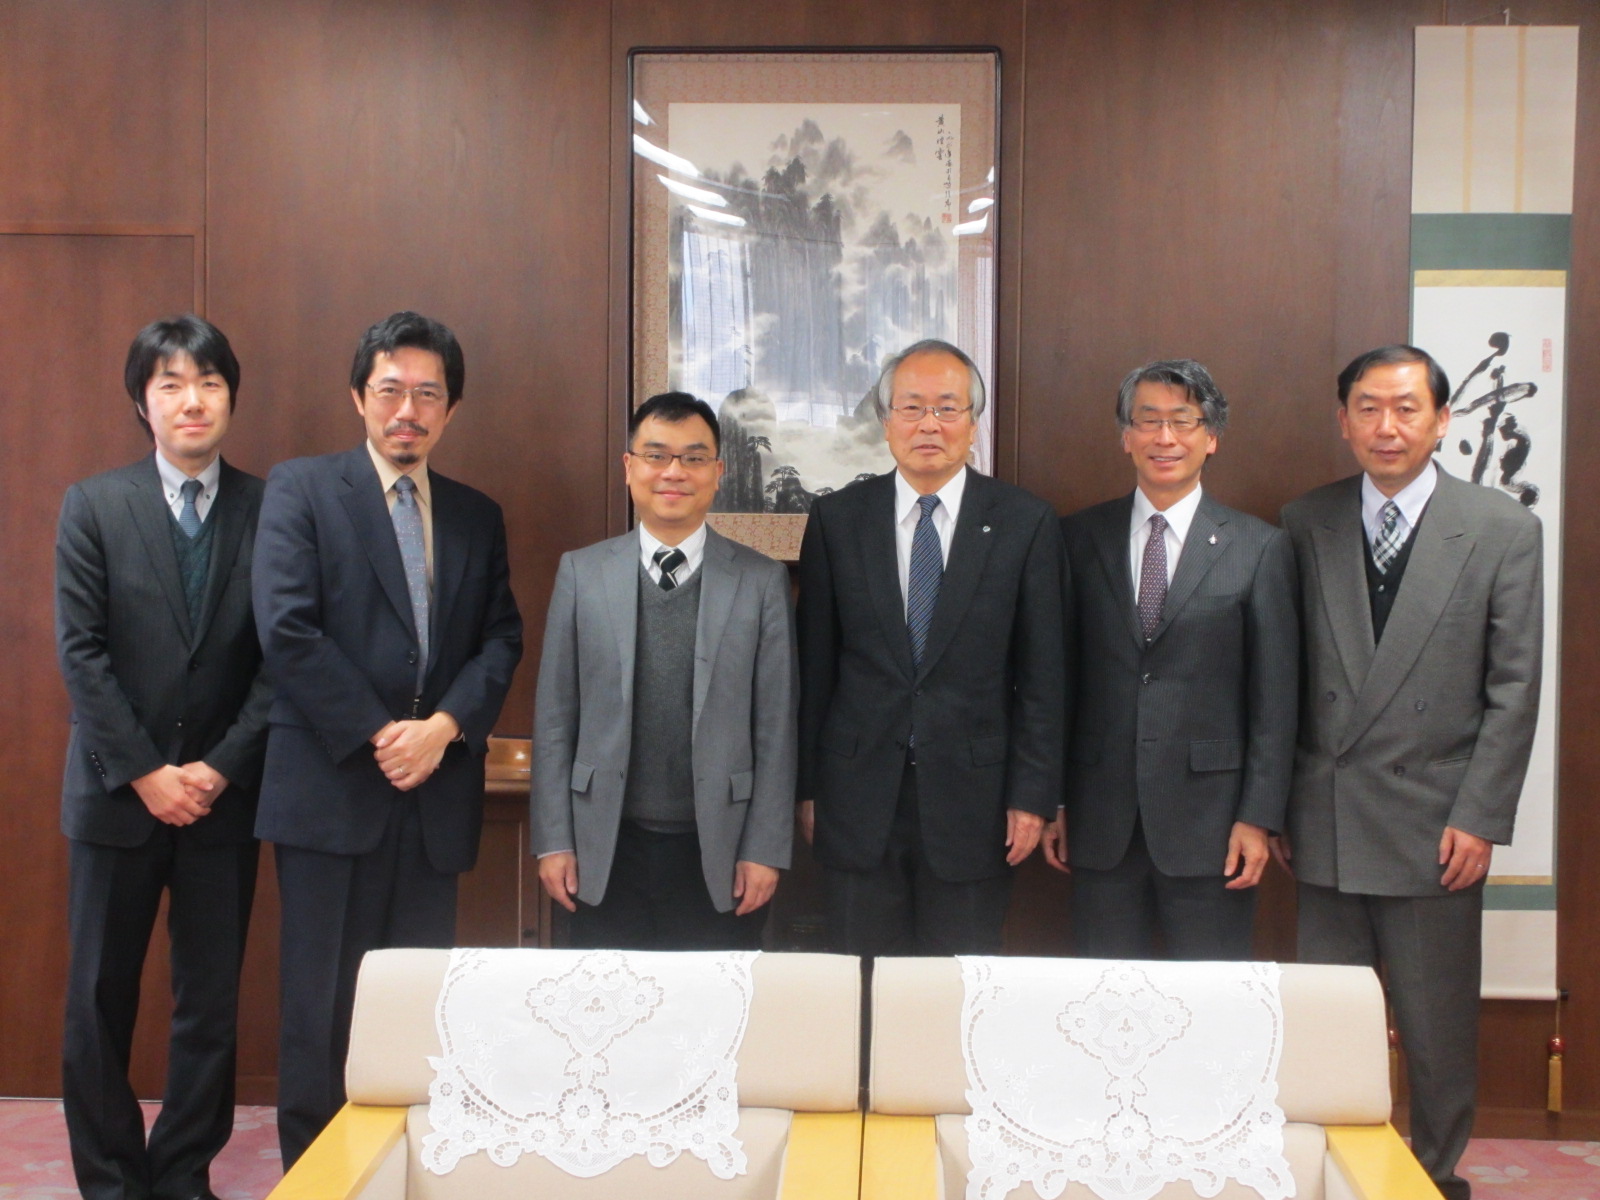 【From left】Prof.Maemoto, Director of International Center Prof.Shinkai, Prof.Huang, President Inoue, Prof.Tsutsui, Prof.Nishiguchi